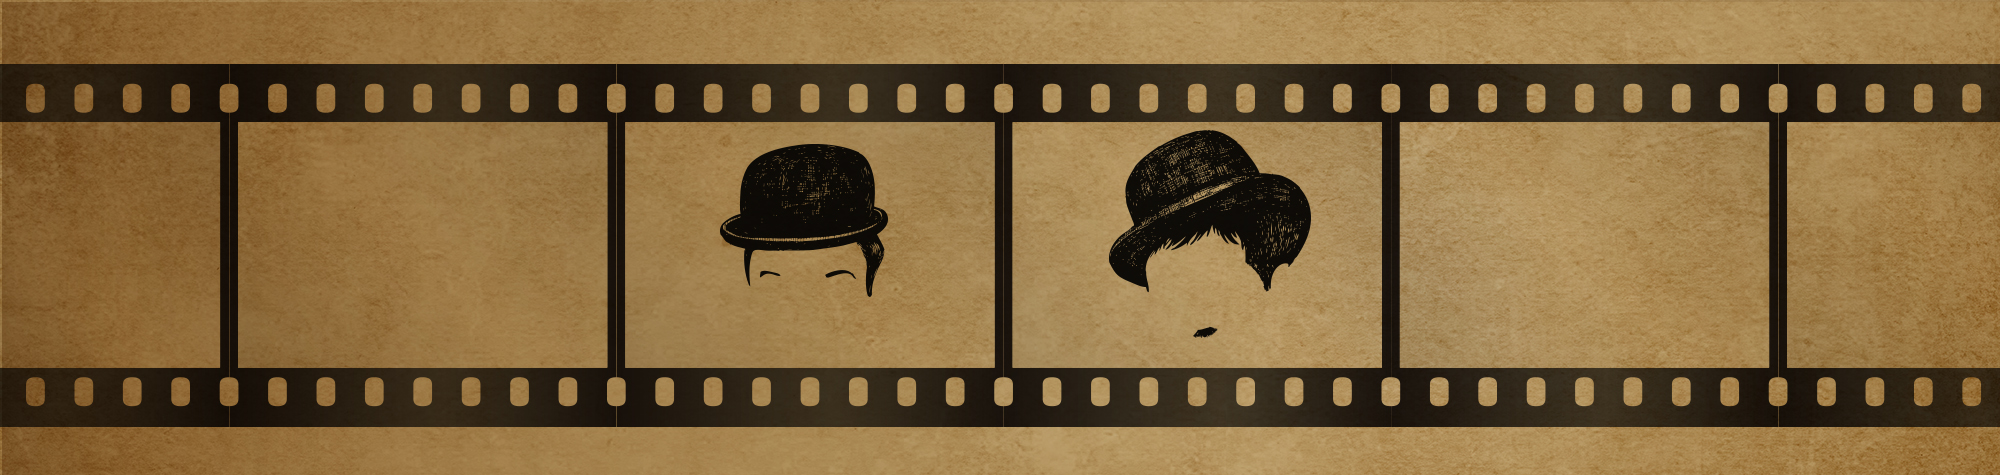 Cinema History: Laurel and Hardy